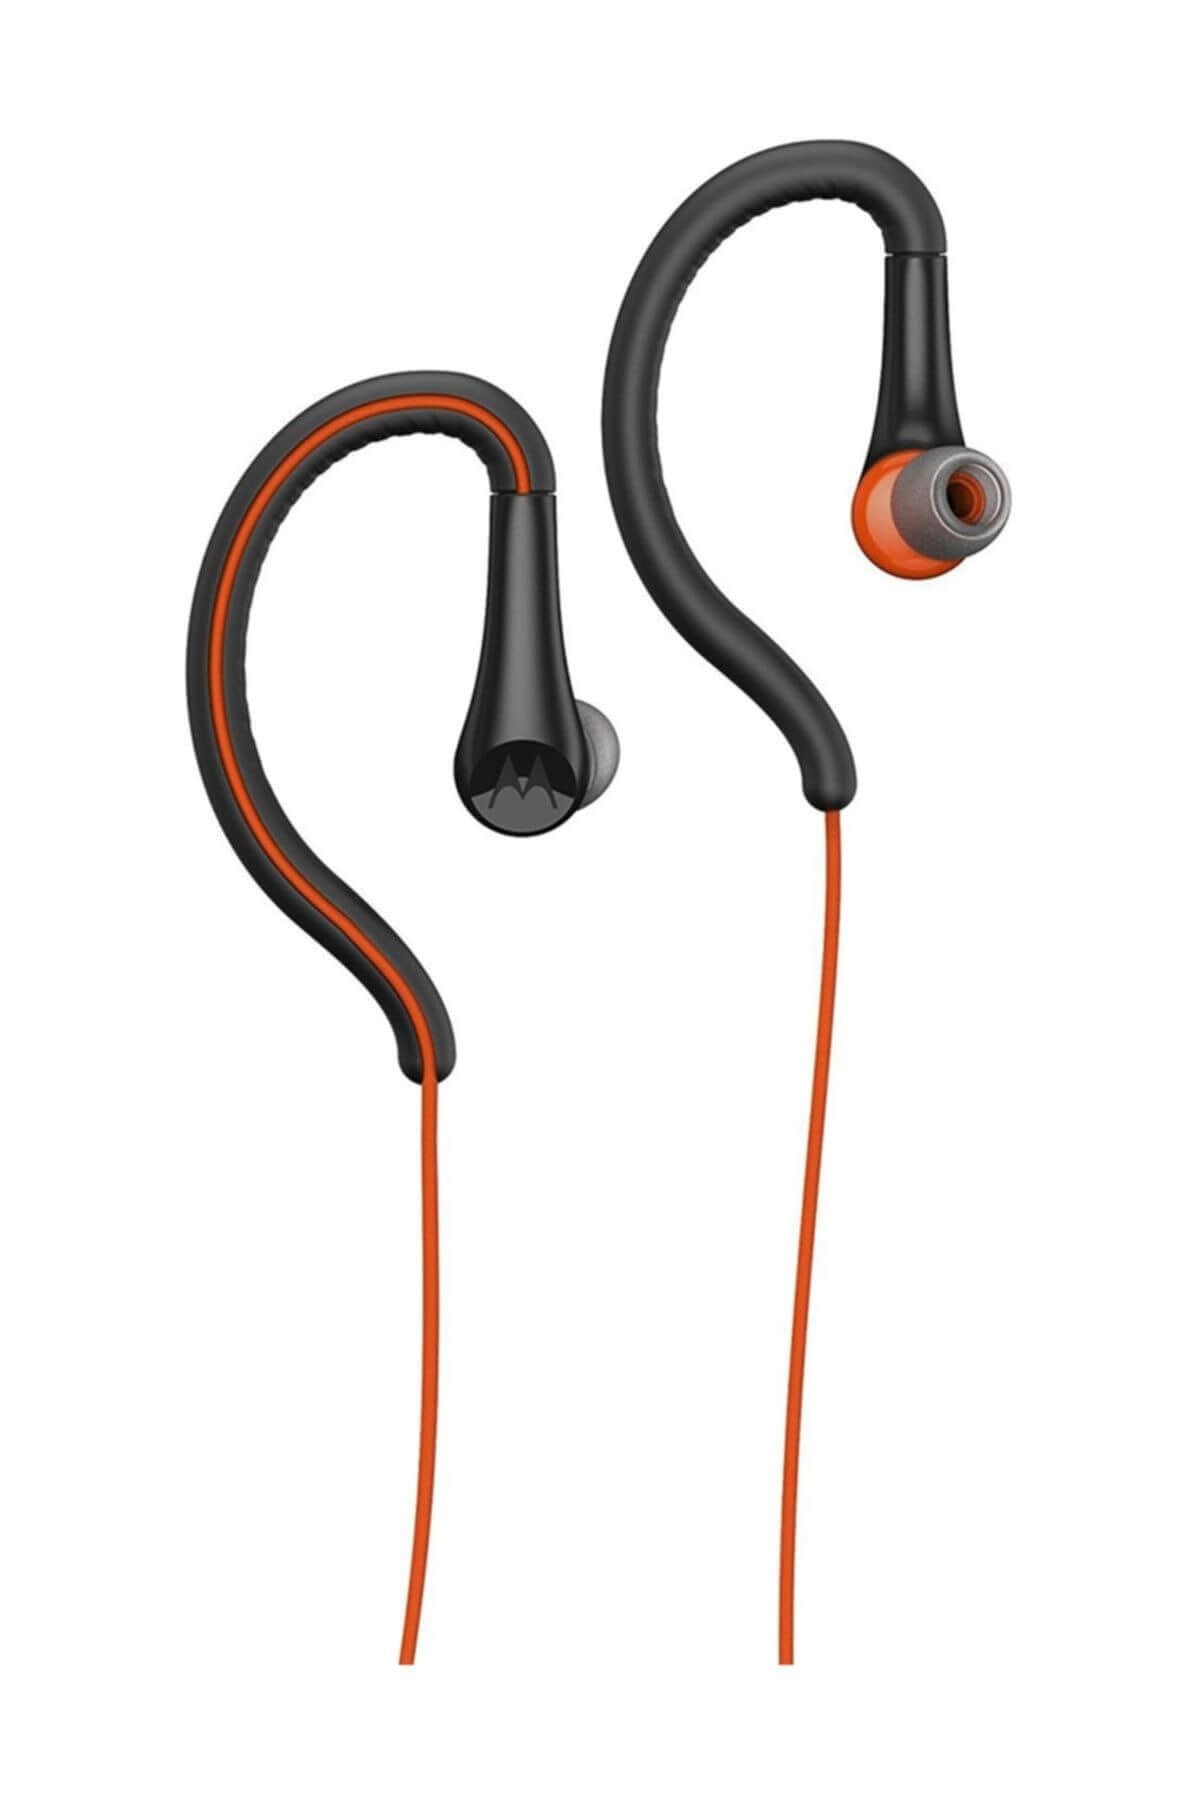 Motorola Earbuds Sport Turuncu Mikrofonlu Kablolu Kulakiçi Kulaklık